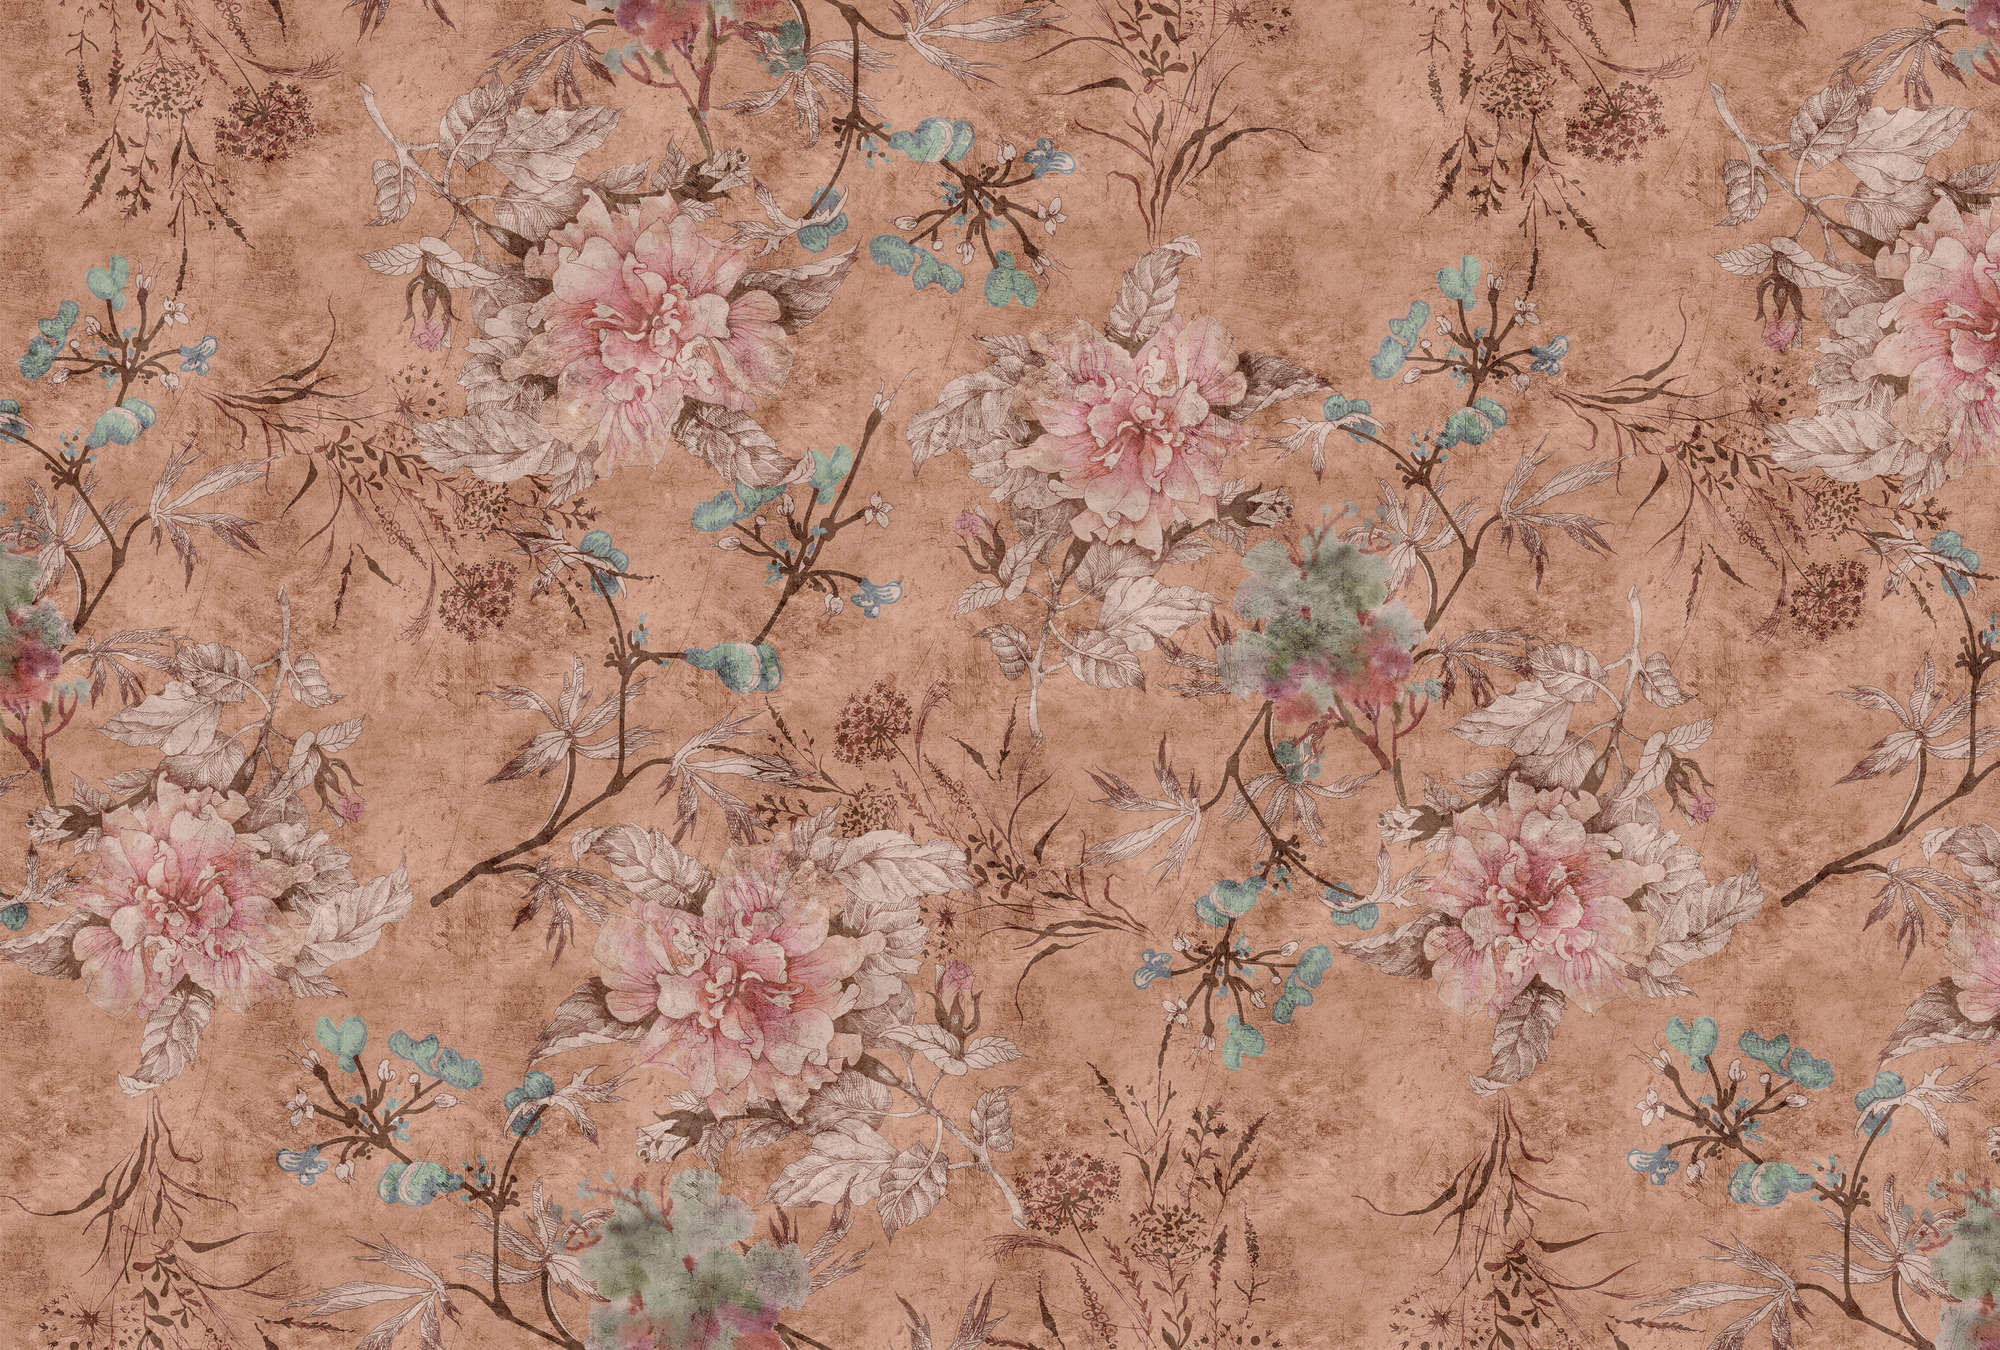             Tenderblossom 3 - digitaal geprint bloemenpatroon in vintage stijl - roze, rood | textuurvliesbehang
        